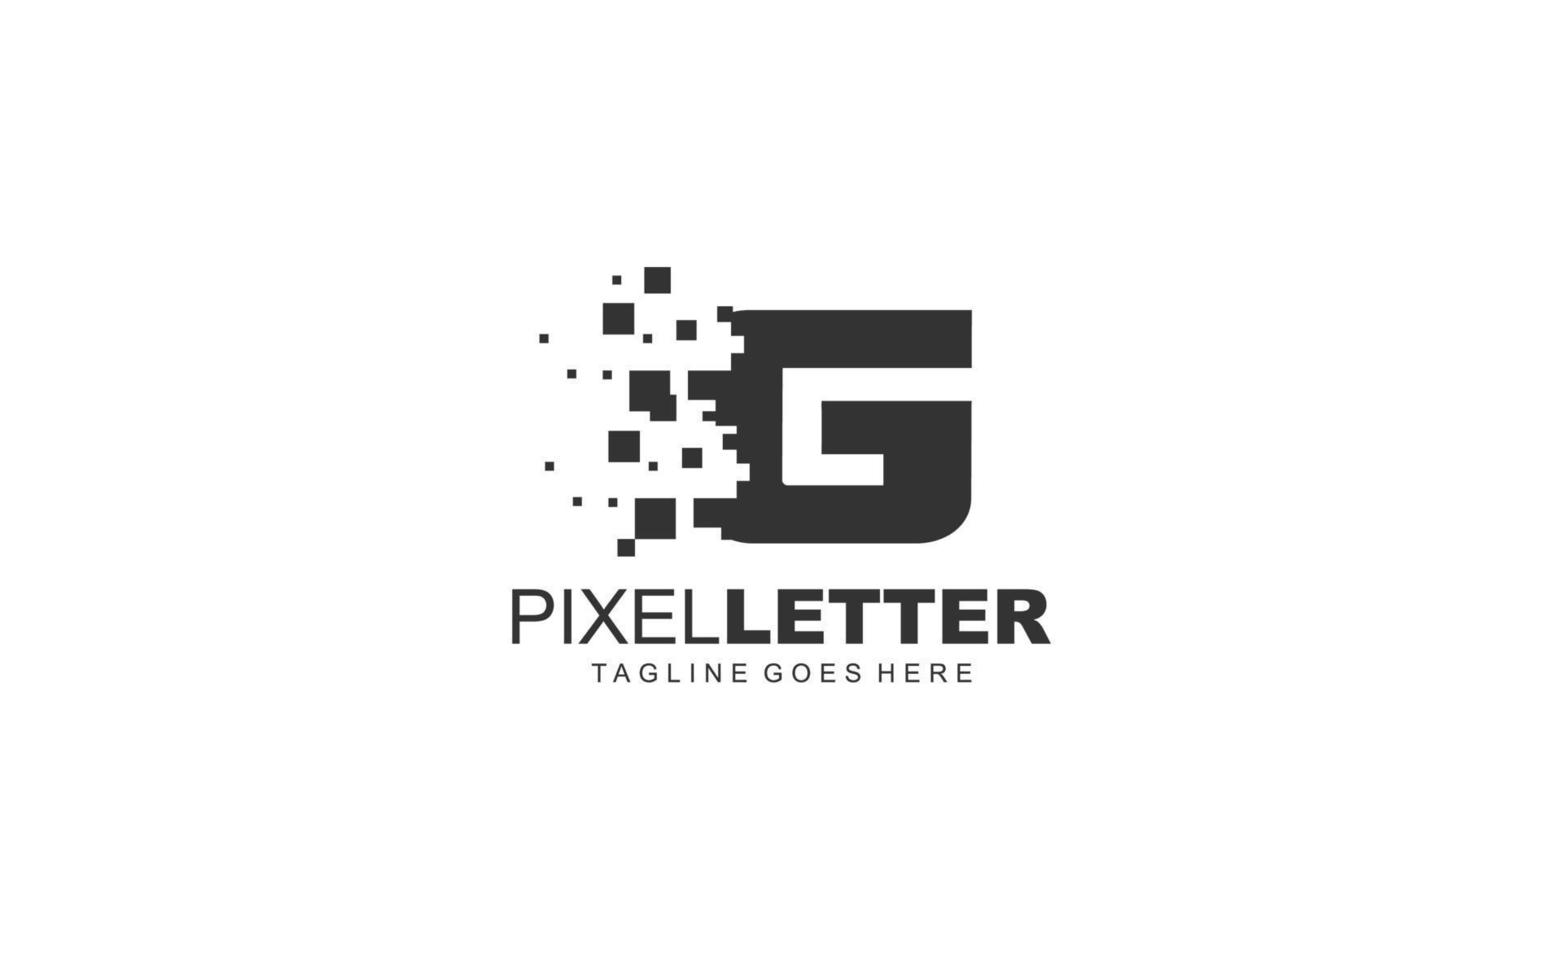 G logo PIXEL for branding company. DIGITAL template vector illustration for your brand.